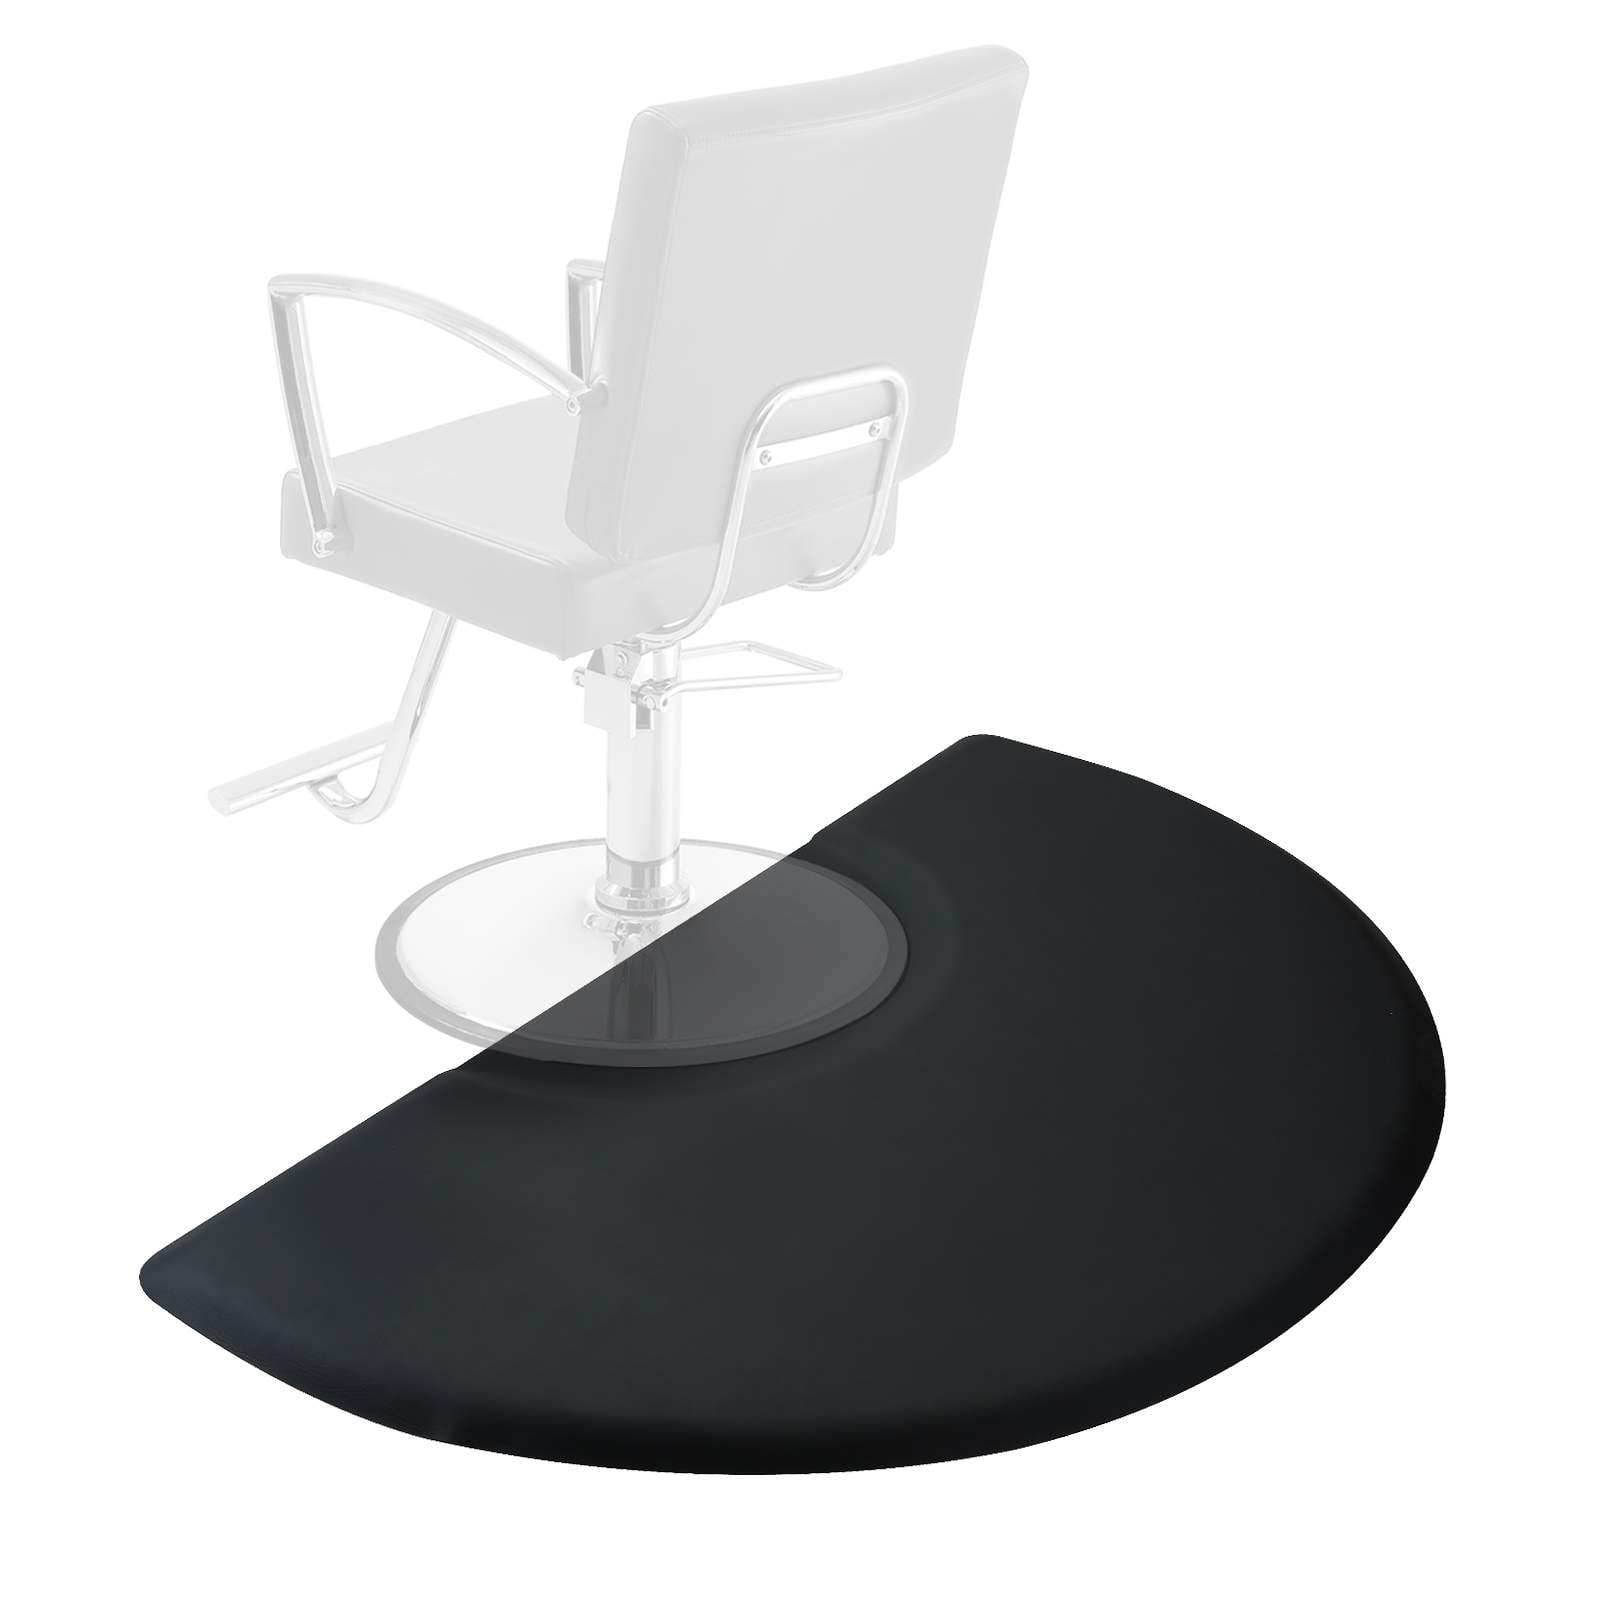 Thick Salon & Barber Shop Chair Anti-Fatigue Floor Mat Saloniture 3 ft Black Semi Circle x 5 ft 5/8 in